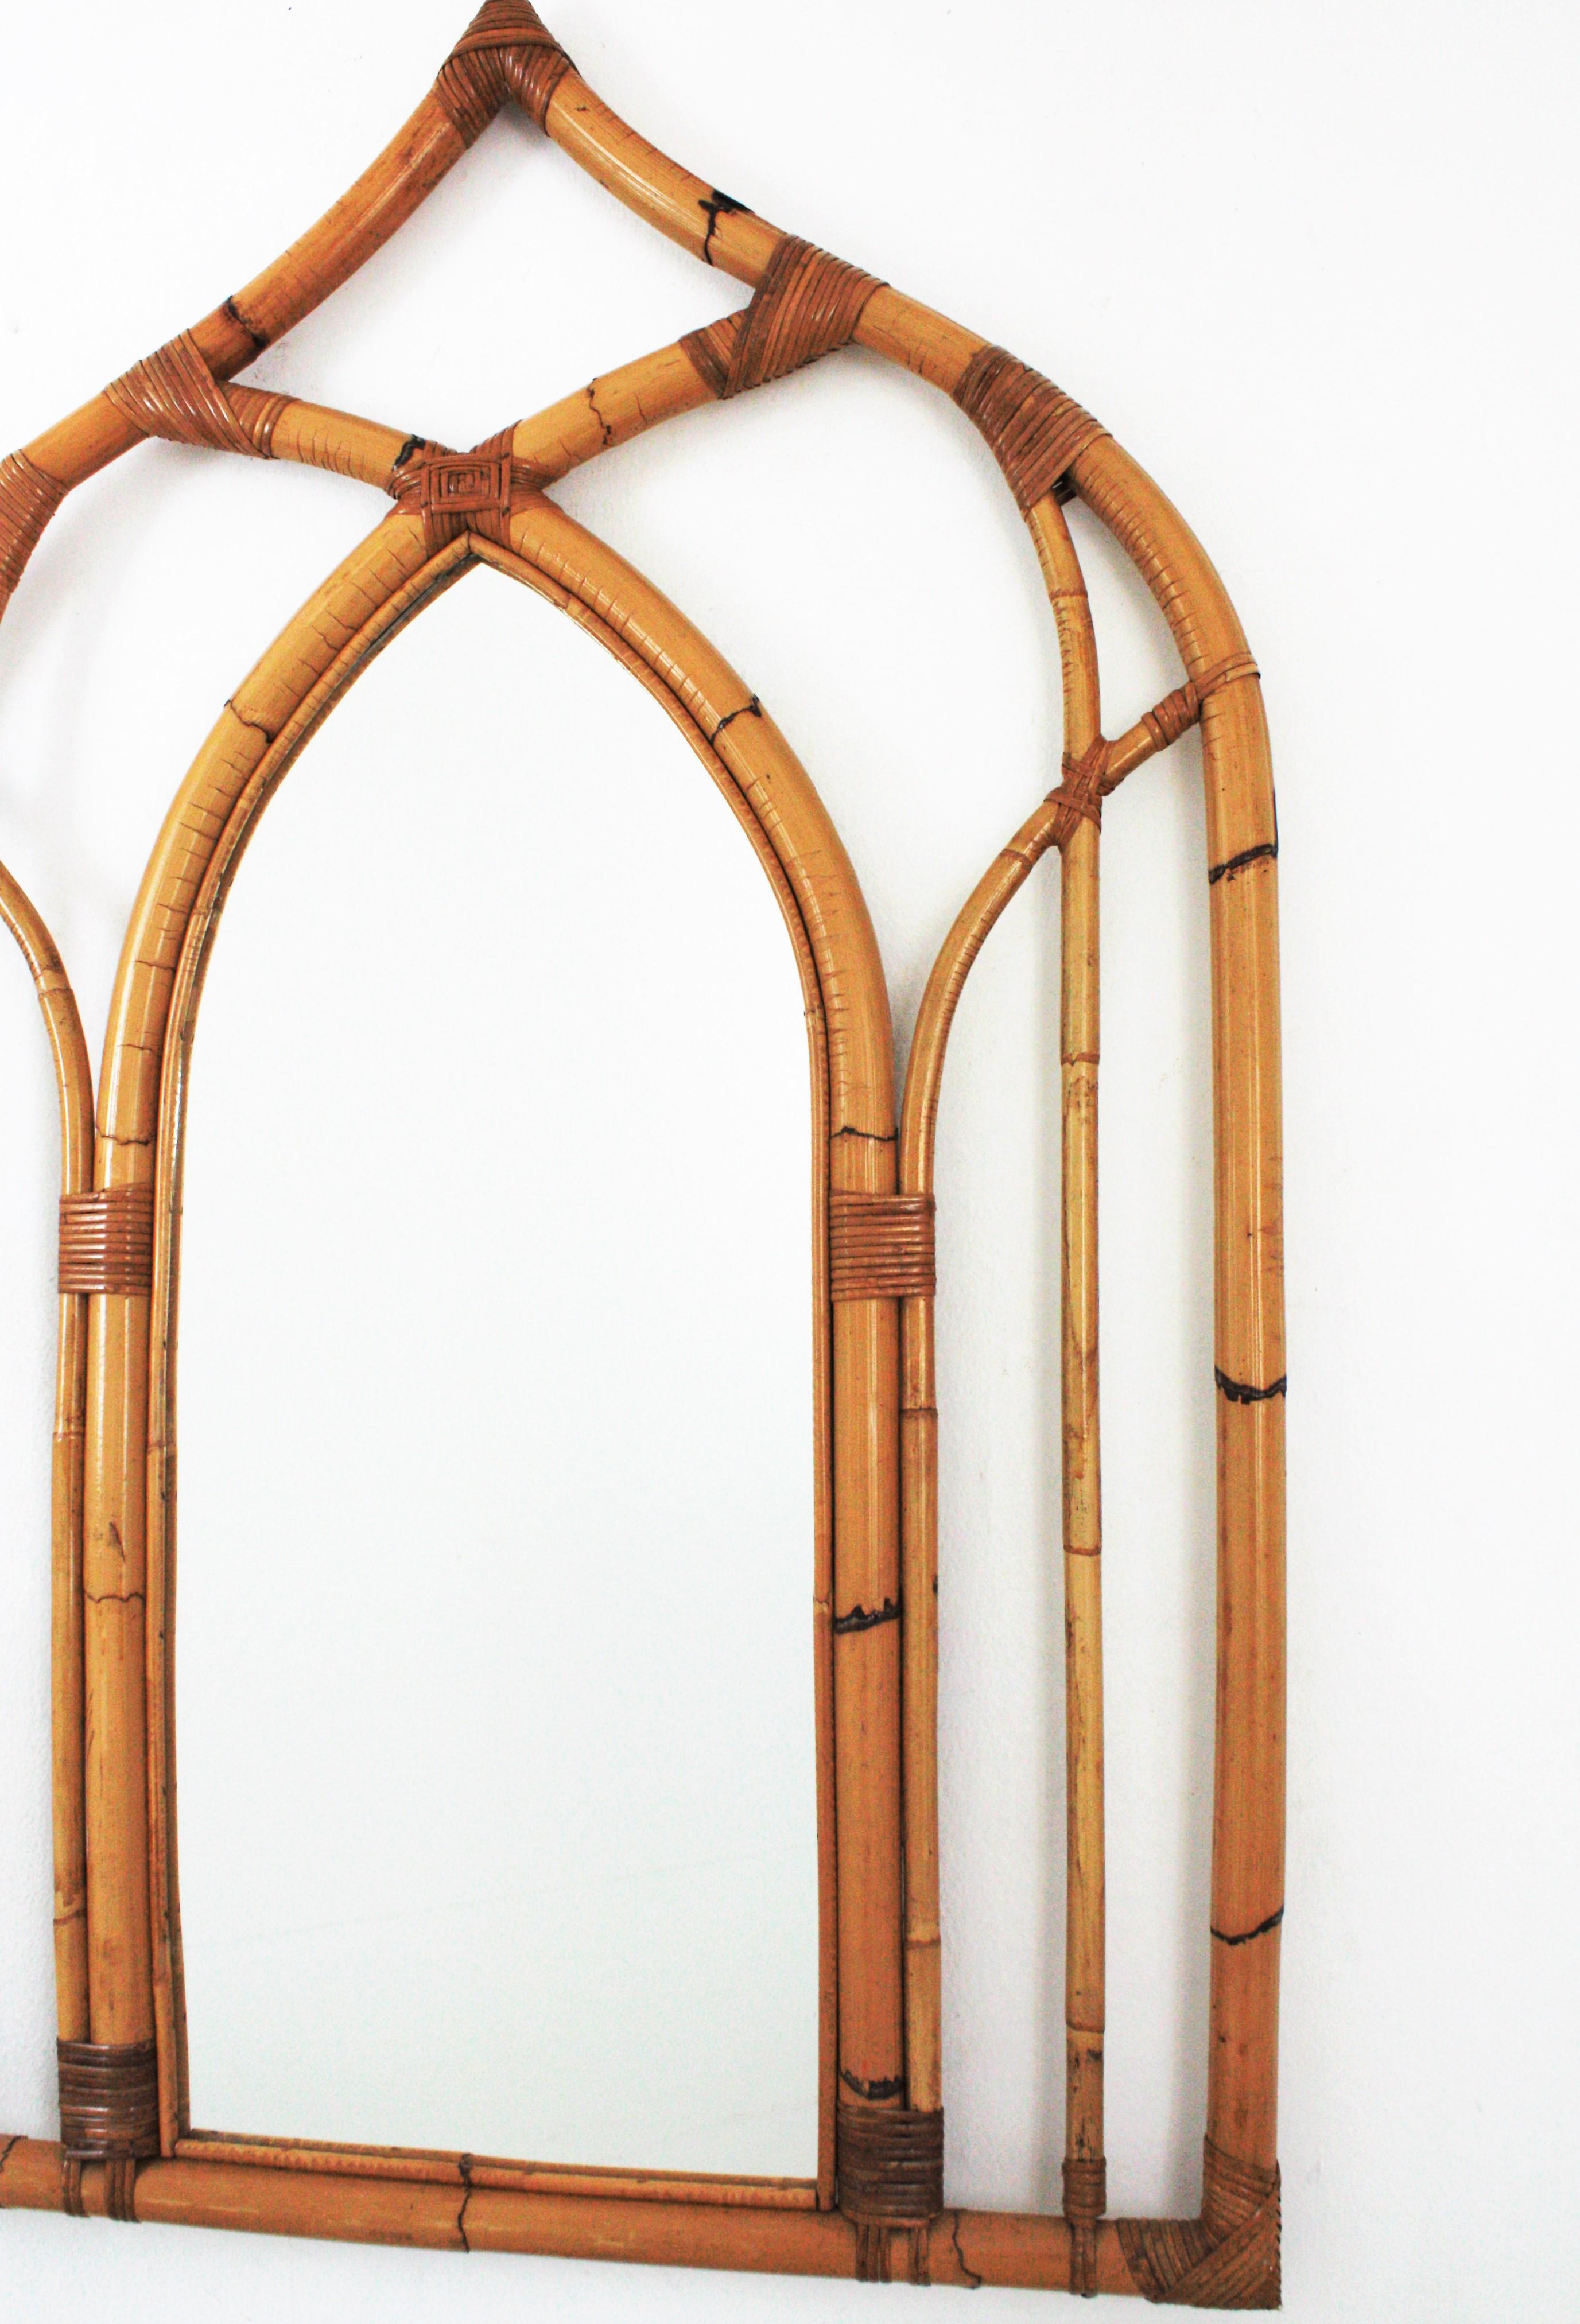 20th Century Bamboo Rattan Italian Modernist Arabic Inspired Wall Mirror For Sale